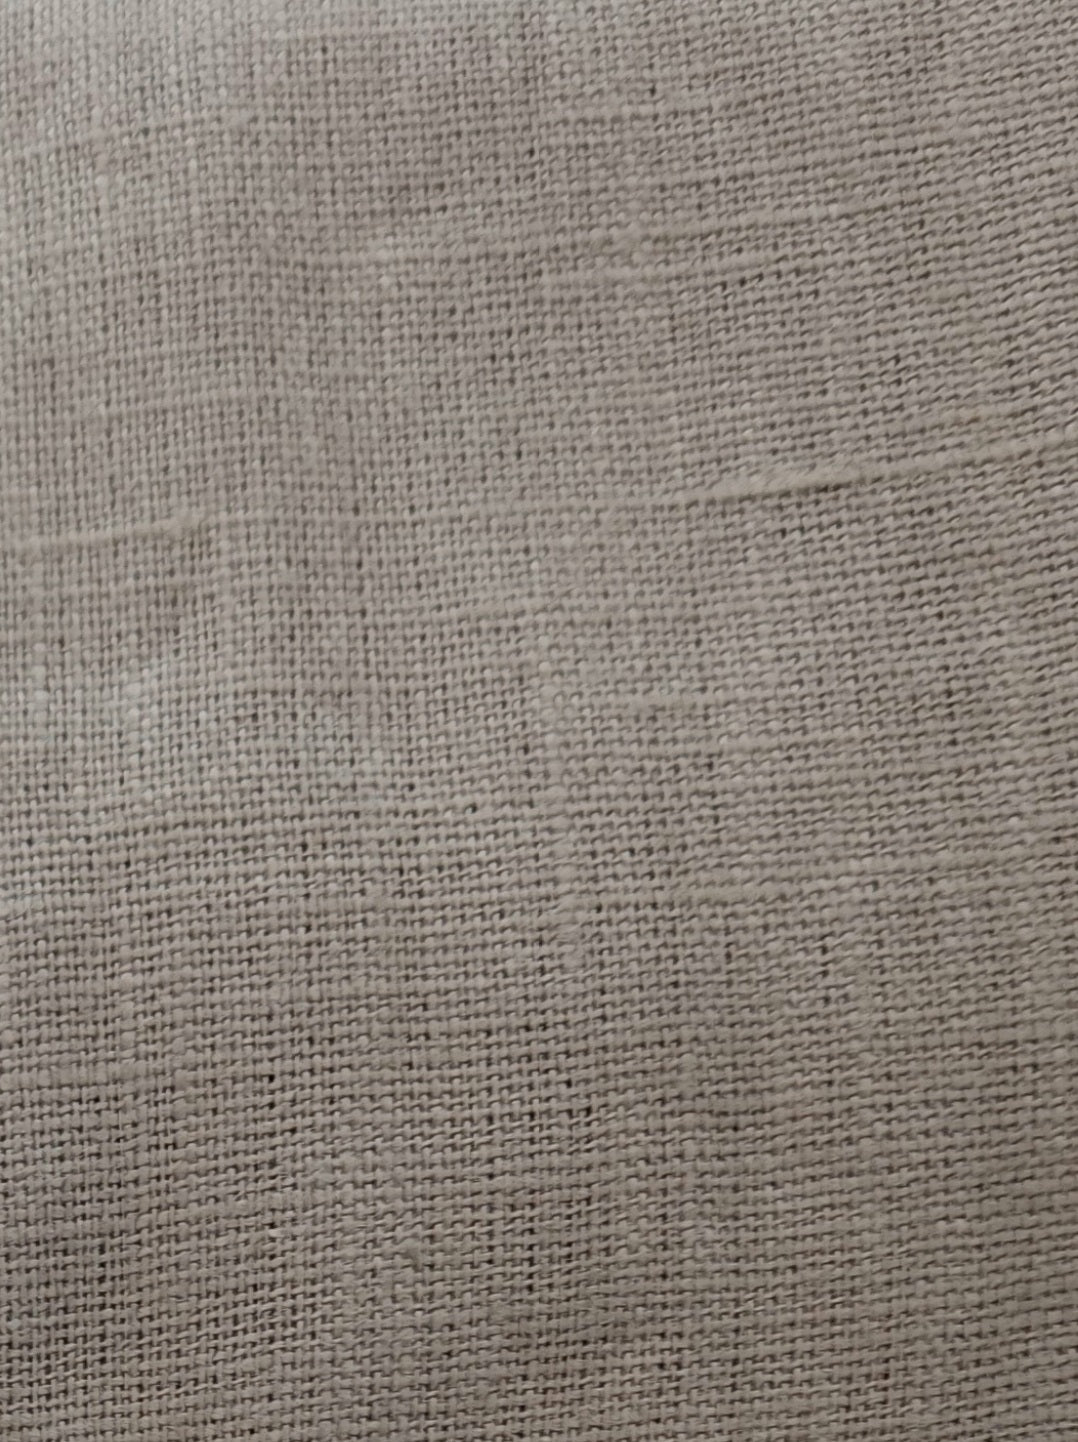 Rocky Mountains - Linen Weave Fabric - 1 Yard